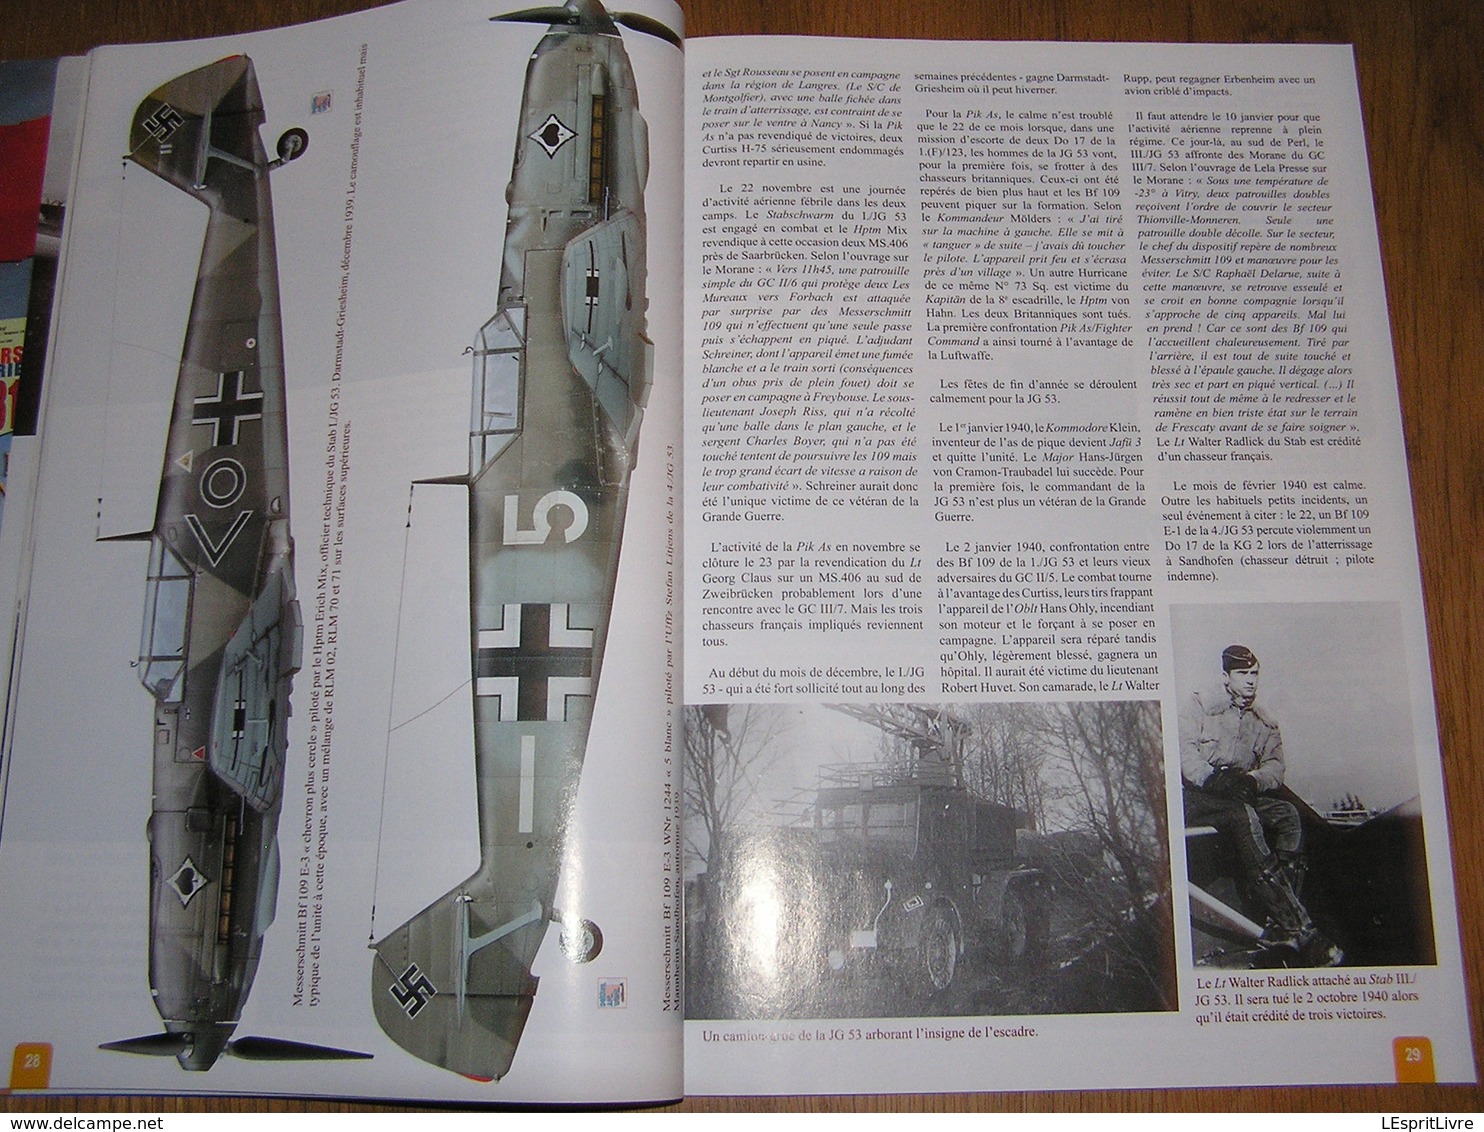 BATAILLES AERIENNES N° 57 Guerre 40 45 L'Histoire de la Jagdgeschwader 53 Pik As luftwaffe Aviation Allemande France JG